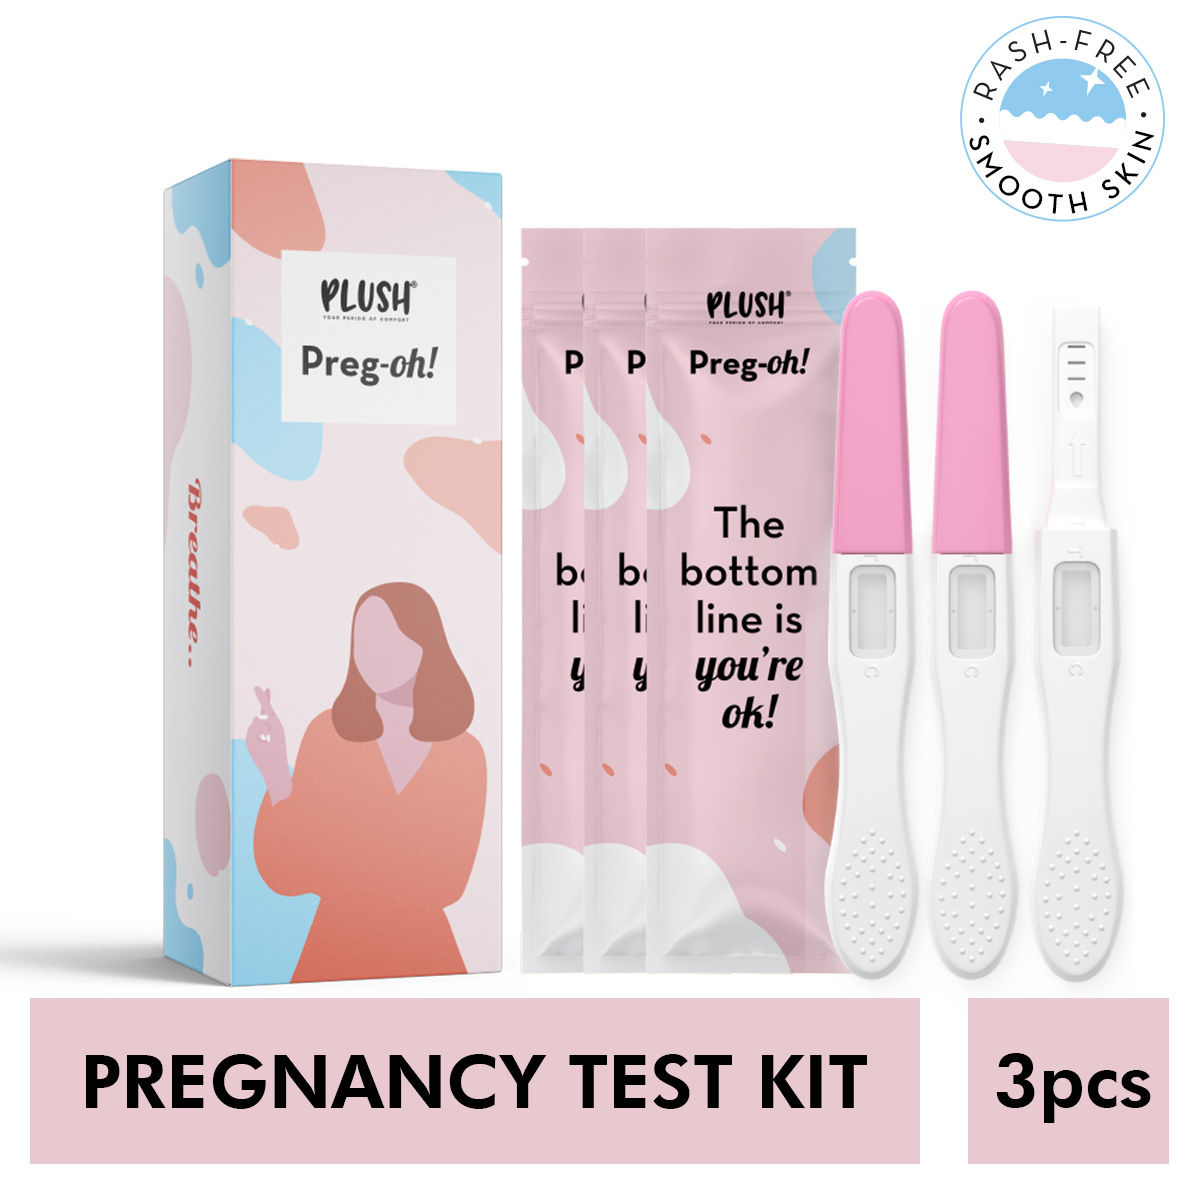 Plush Preg-oh! Midstream Pregnancy Kit Test For Women 99% Accuracy (3N)